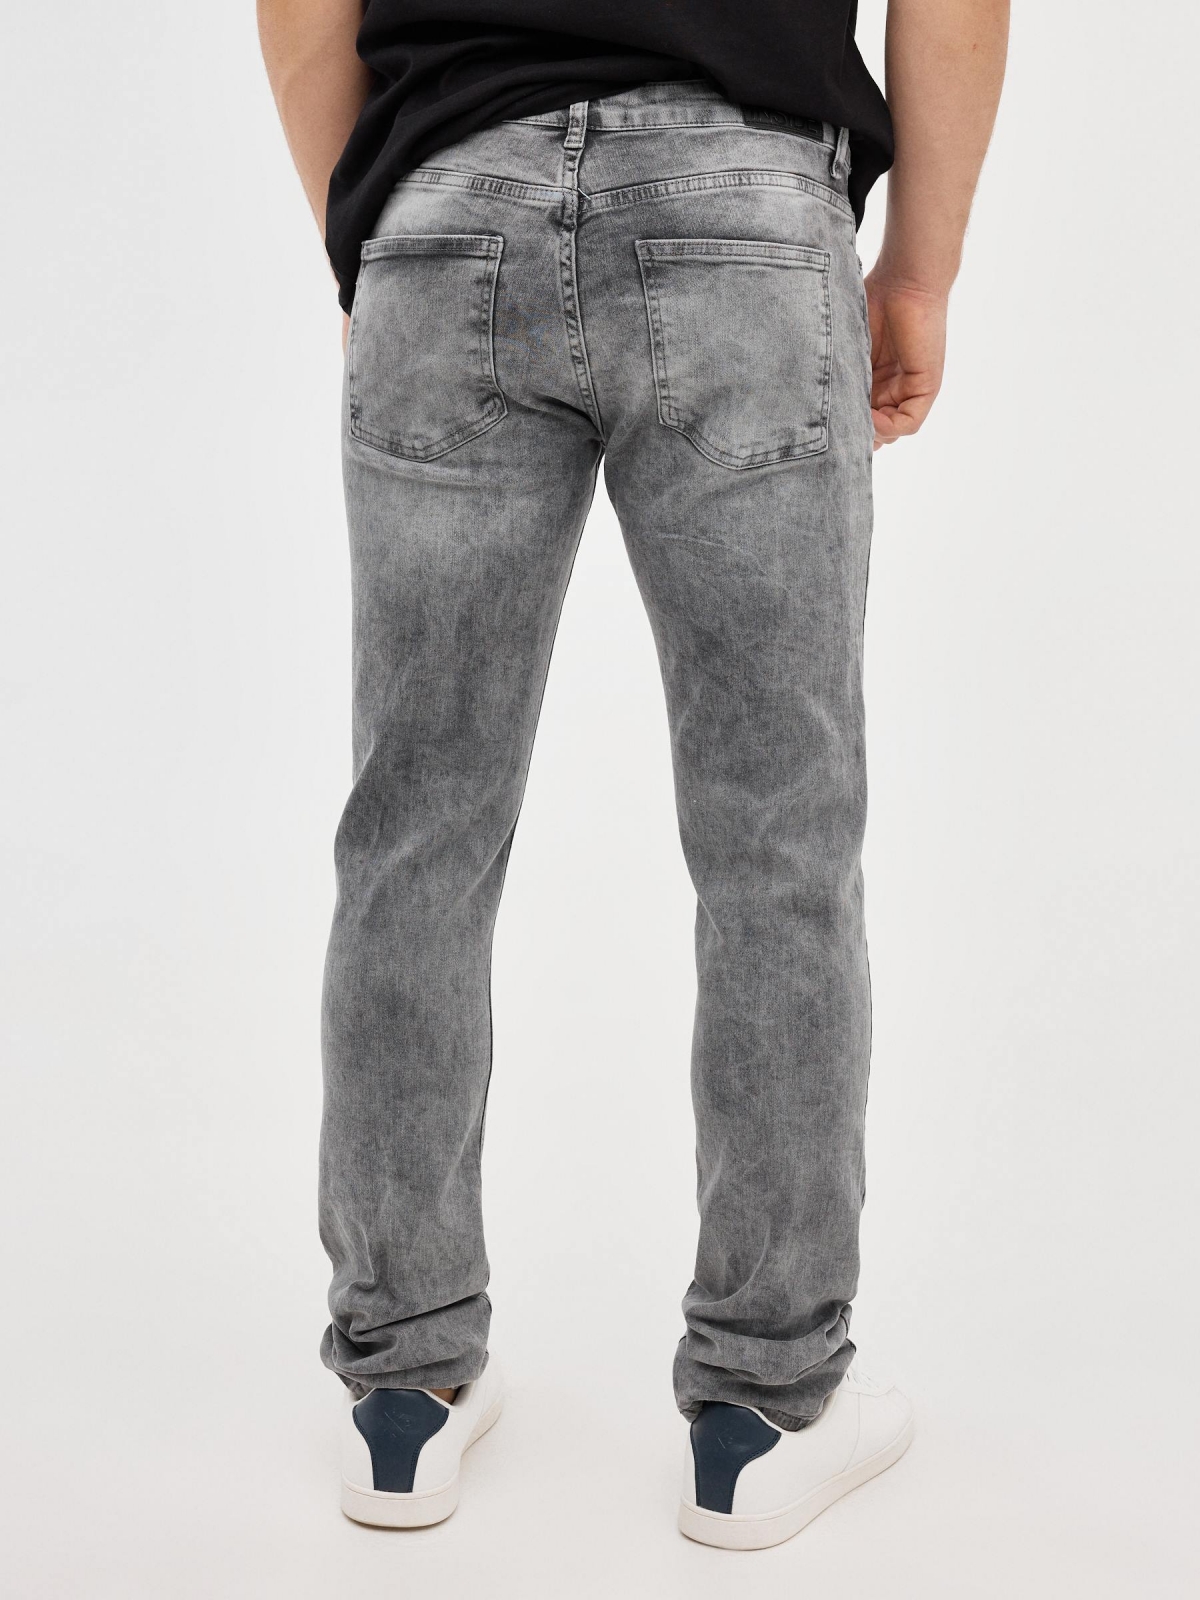 Jeans Slim grises gris oscuro vista media trasera